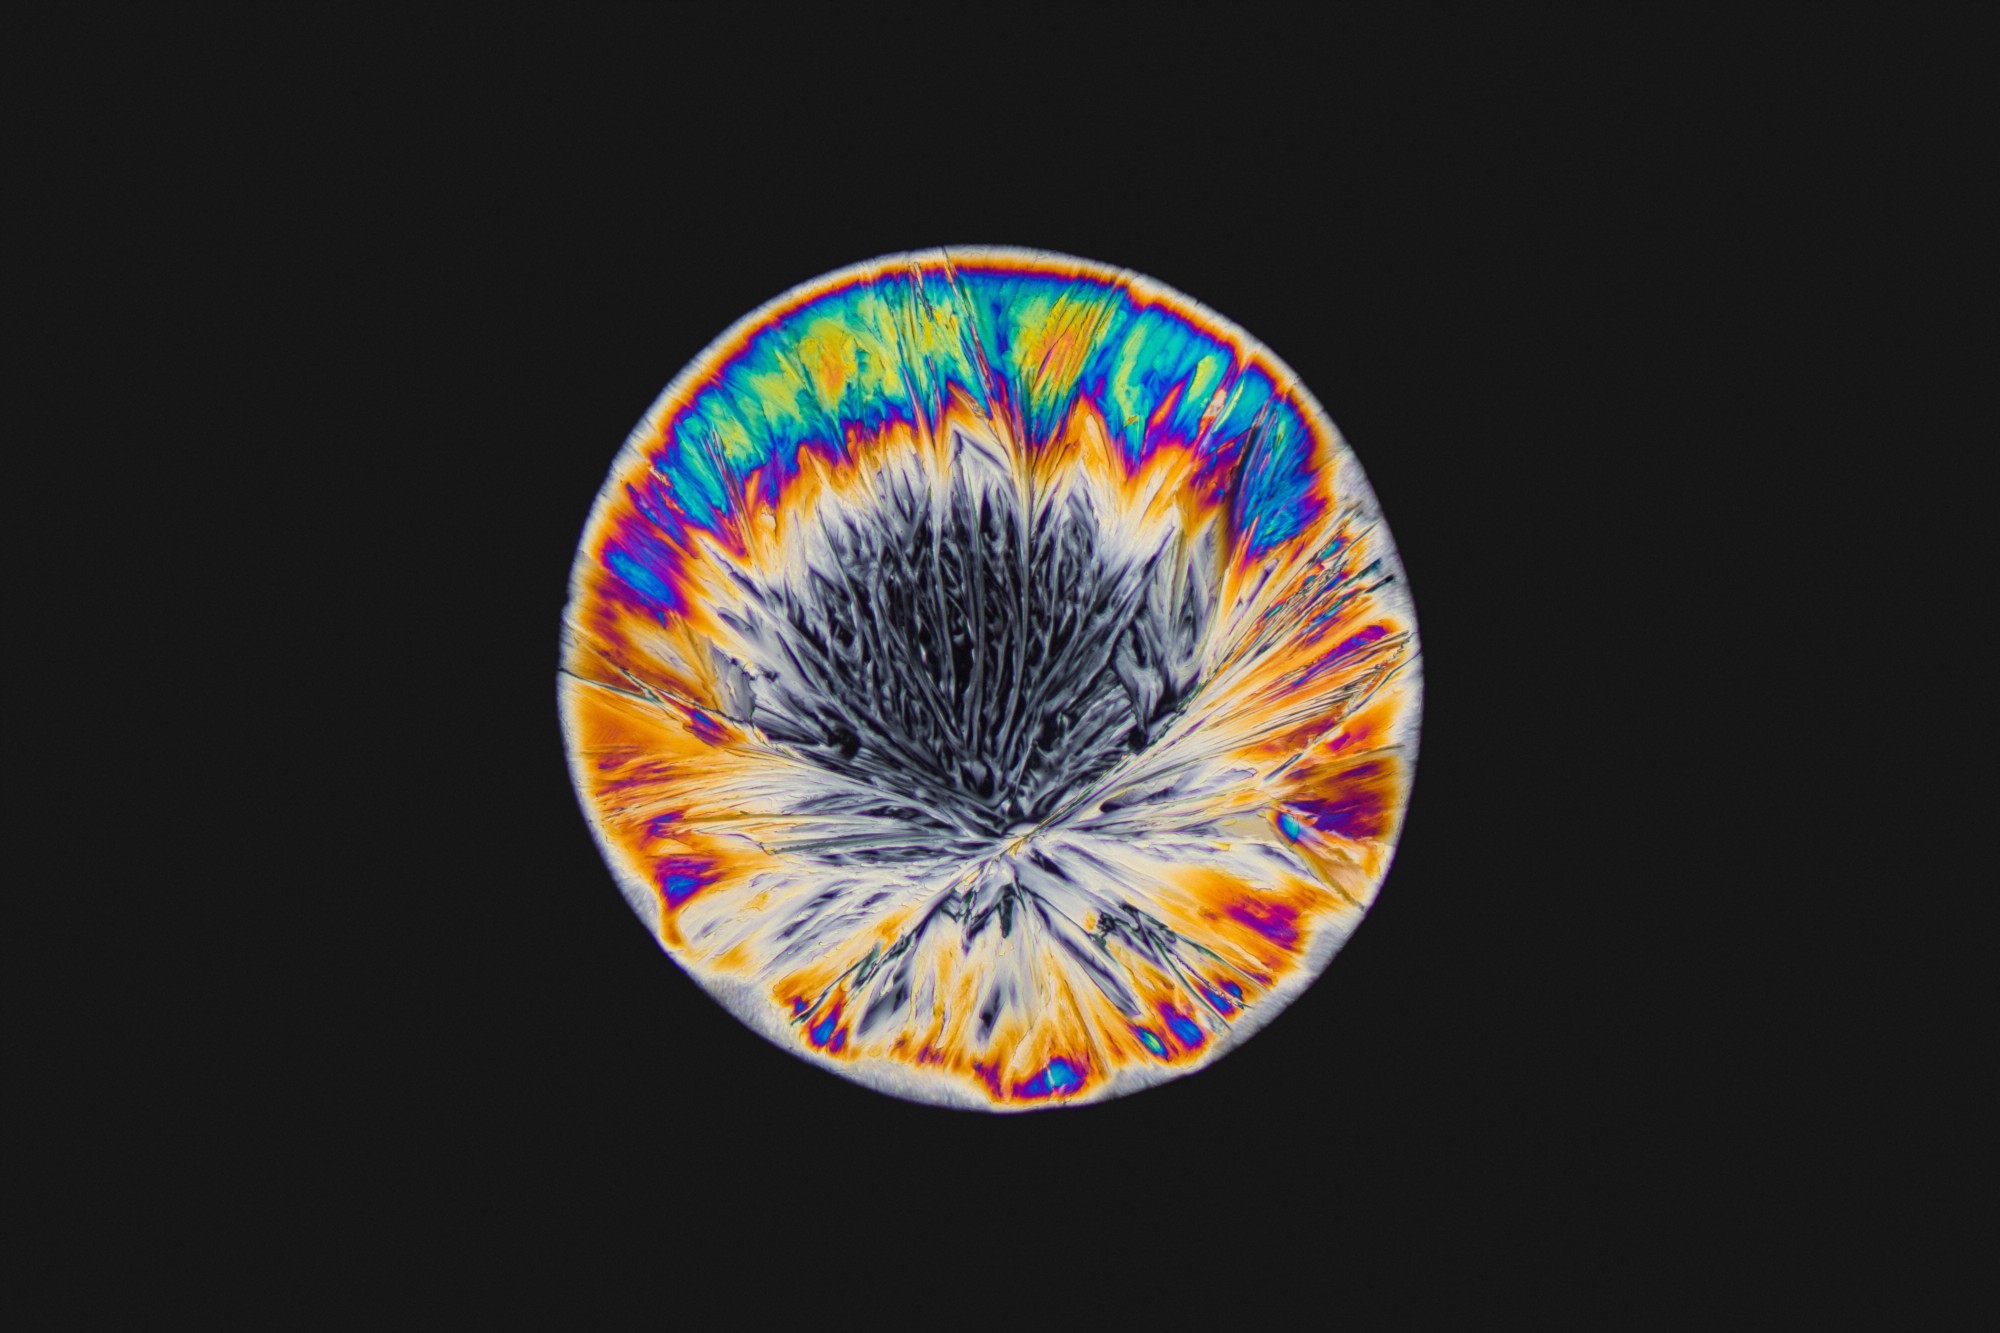 MDMA Crystals ∅ Cross polarisation microscope with 200x enlargement.